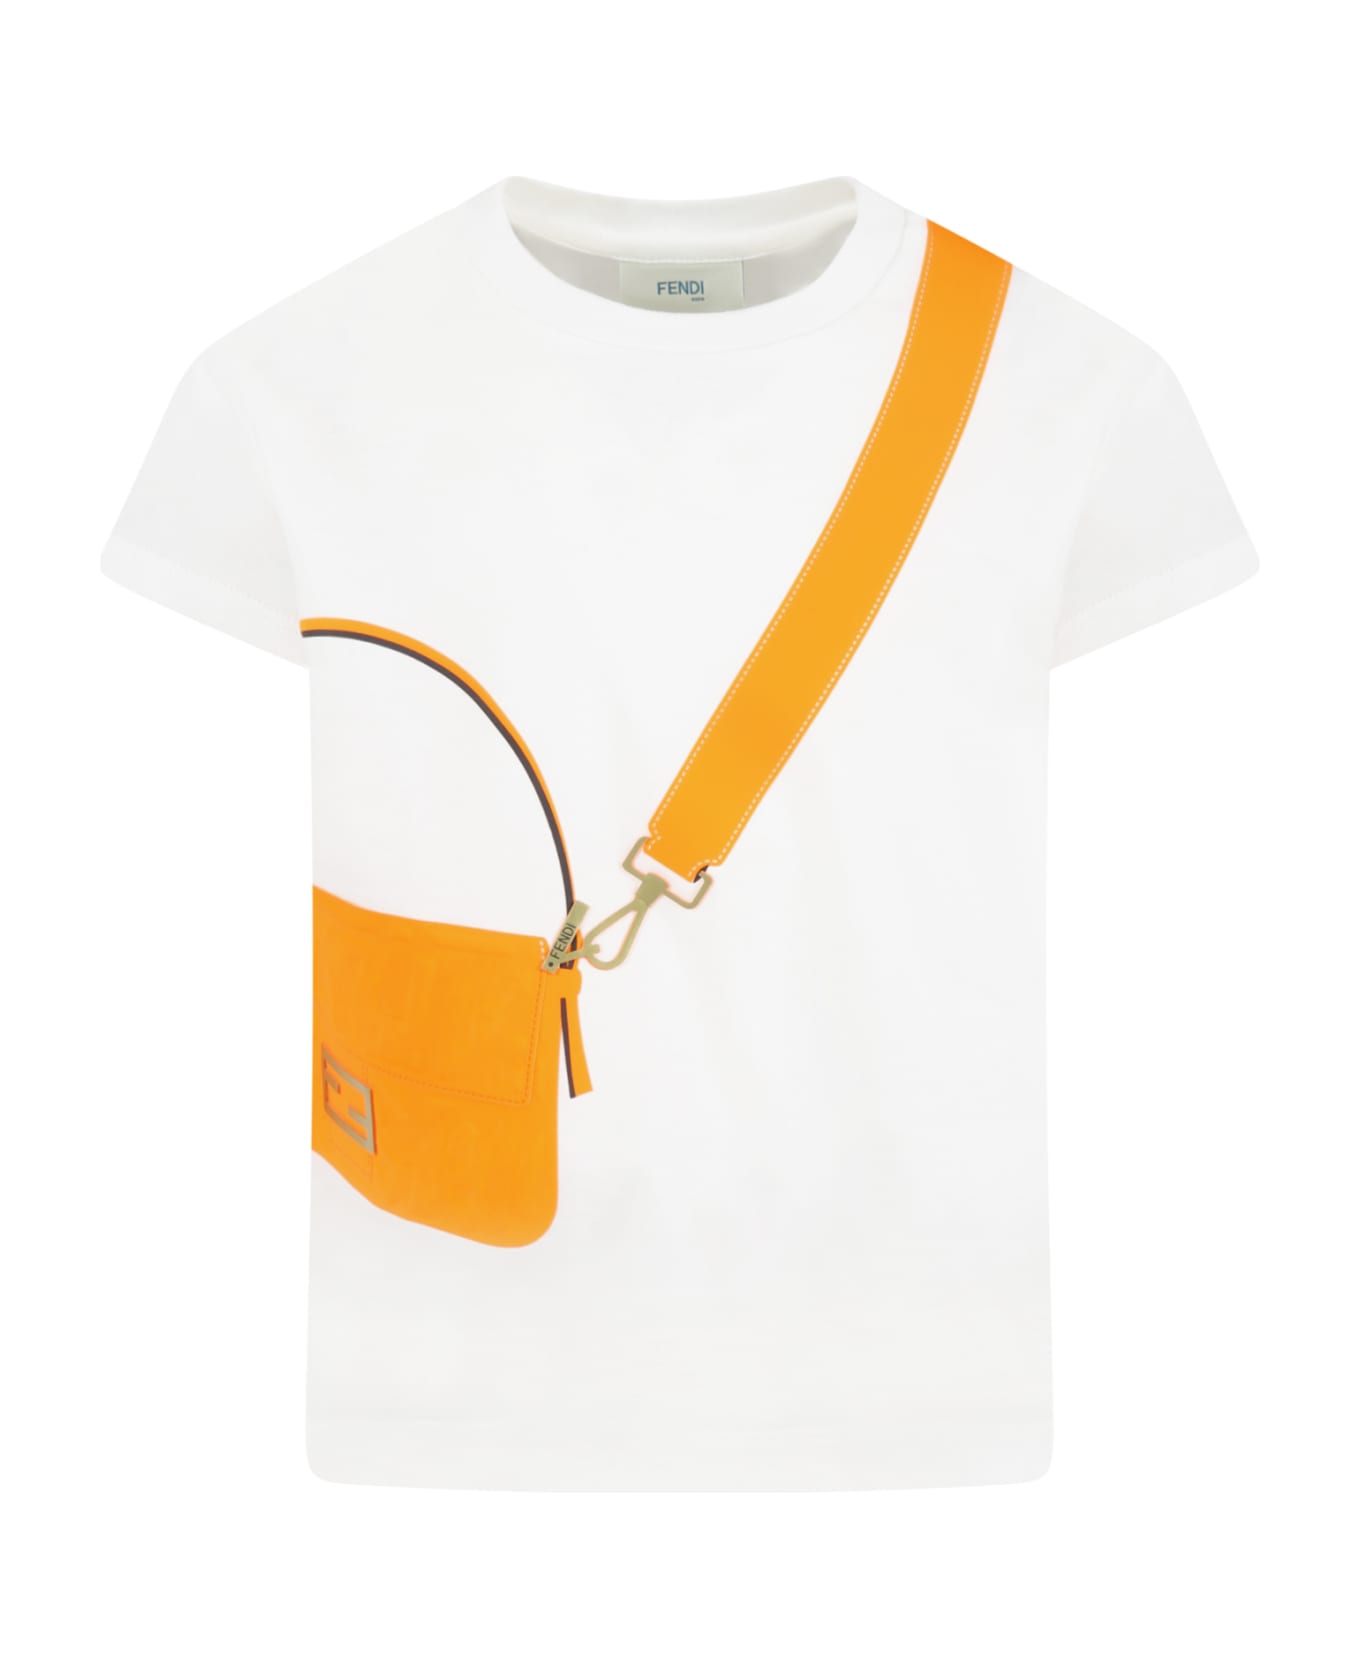 Fendi White T-shirt For Girl With Orange Bag - White